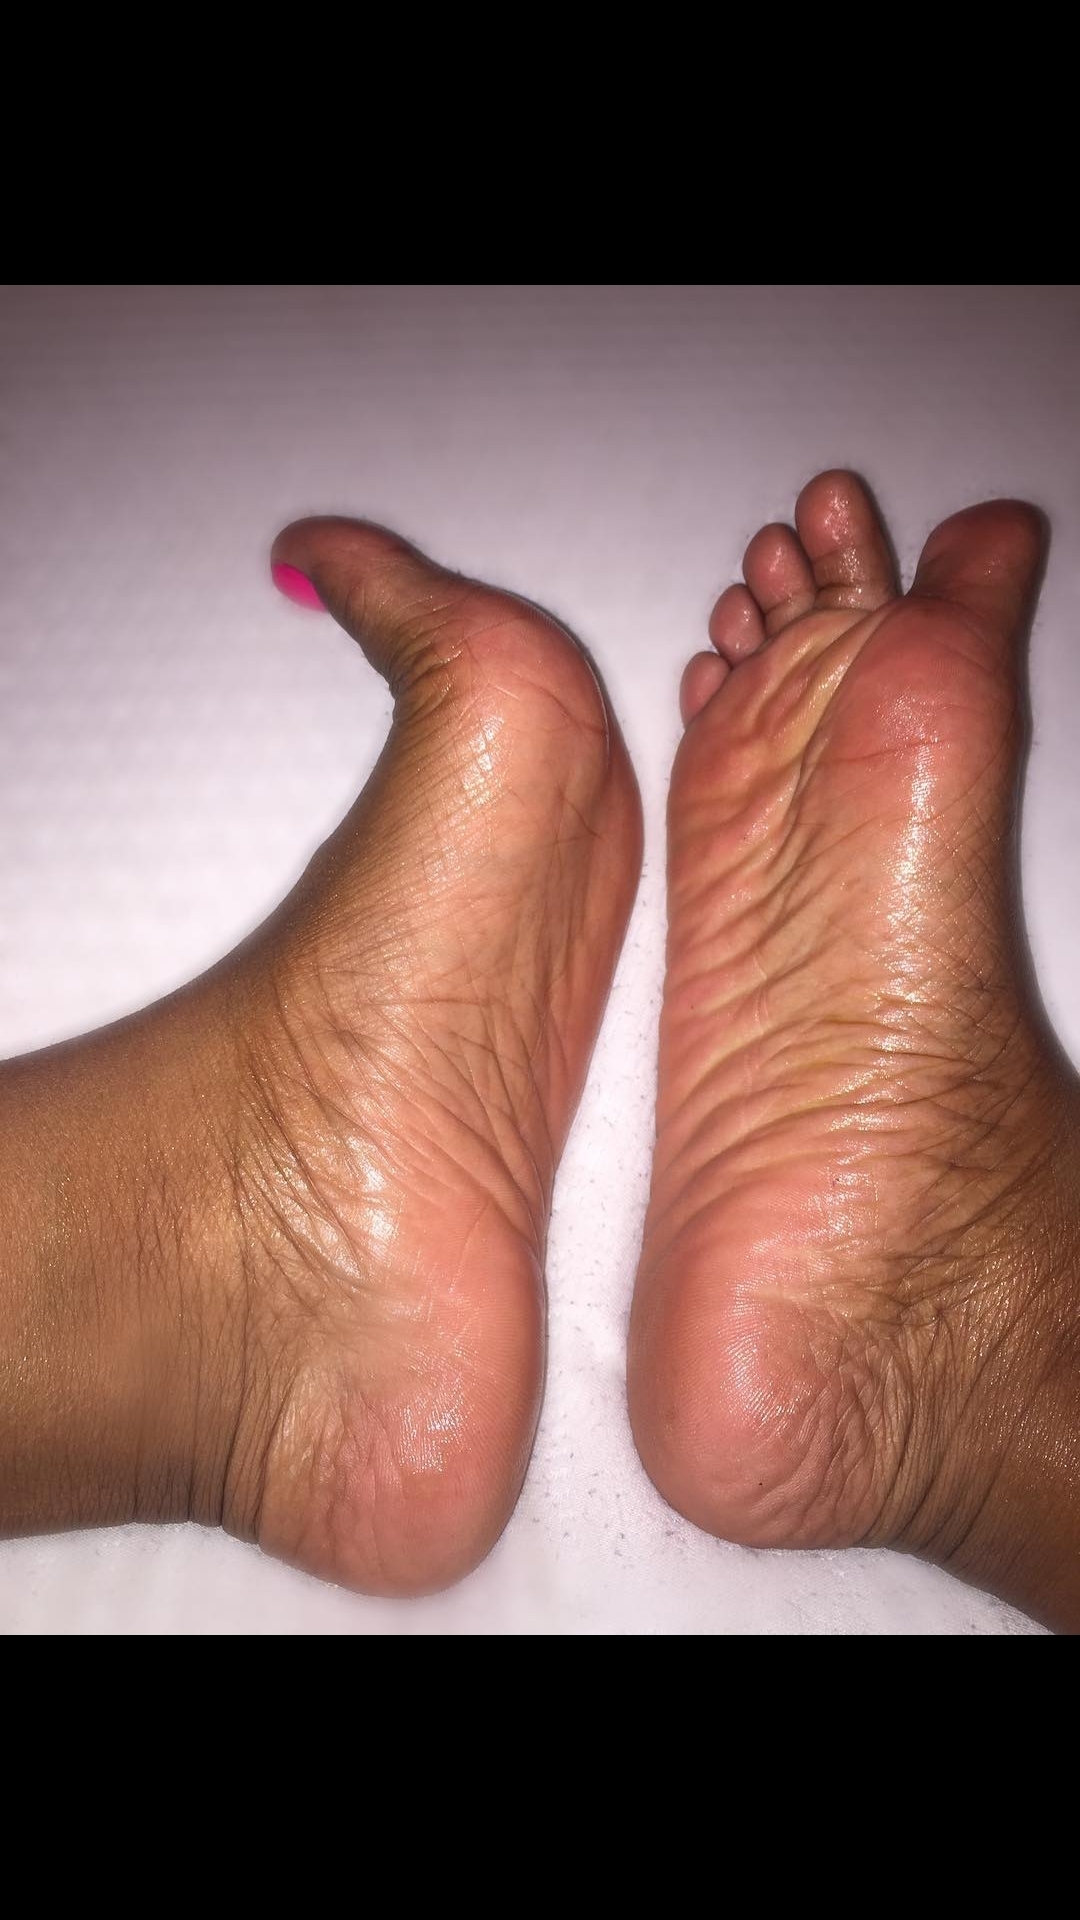 Fat girl feet fetish